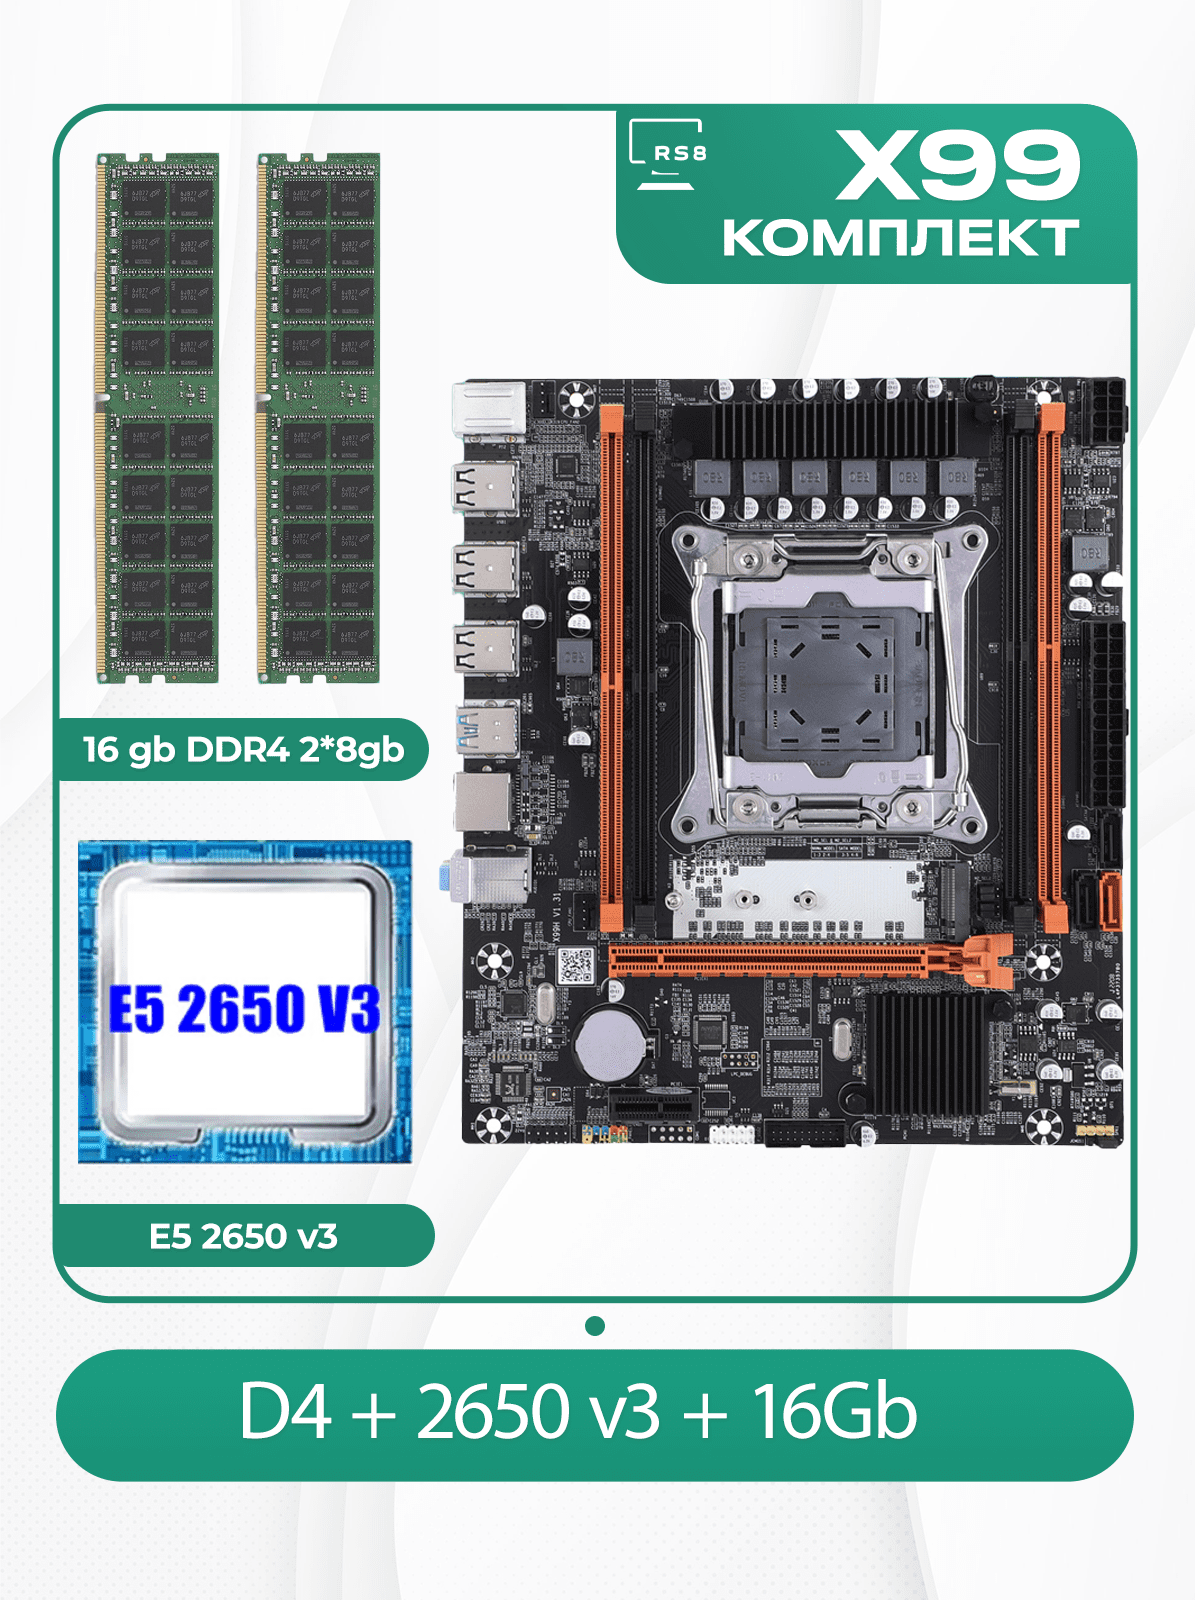 Комплект материнской платы X99: Atermiter D4 2011v3 + Xeon E5 2650v3 + DDR4